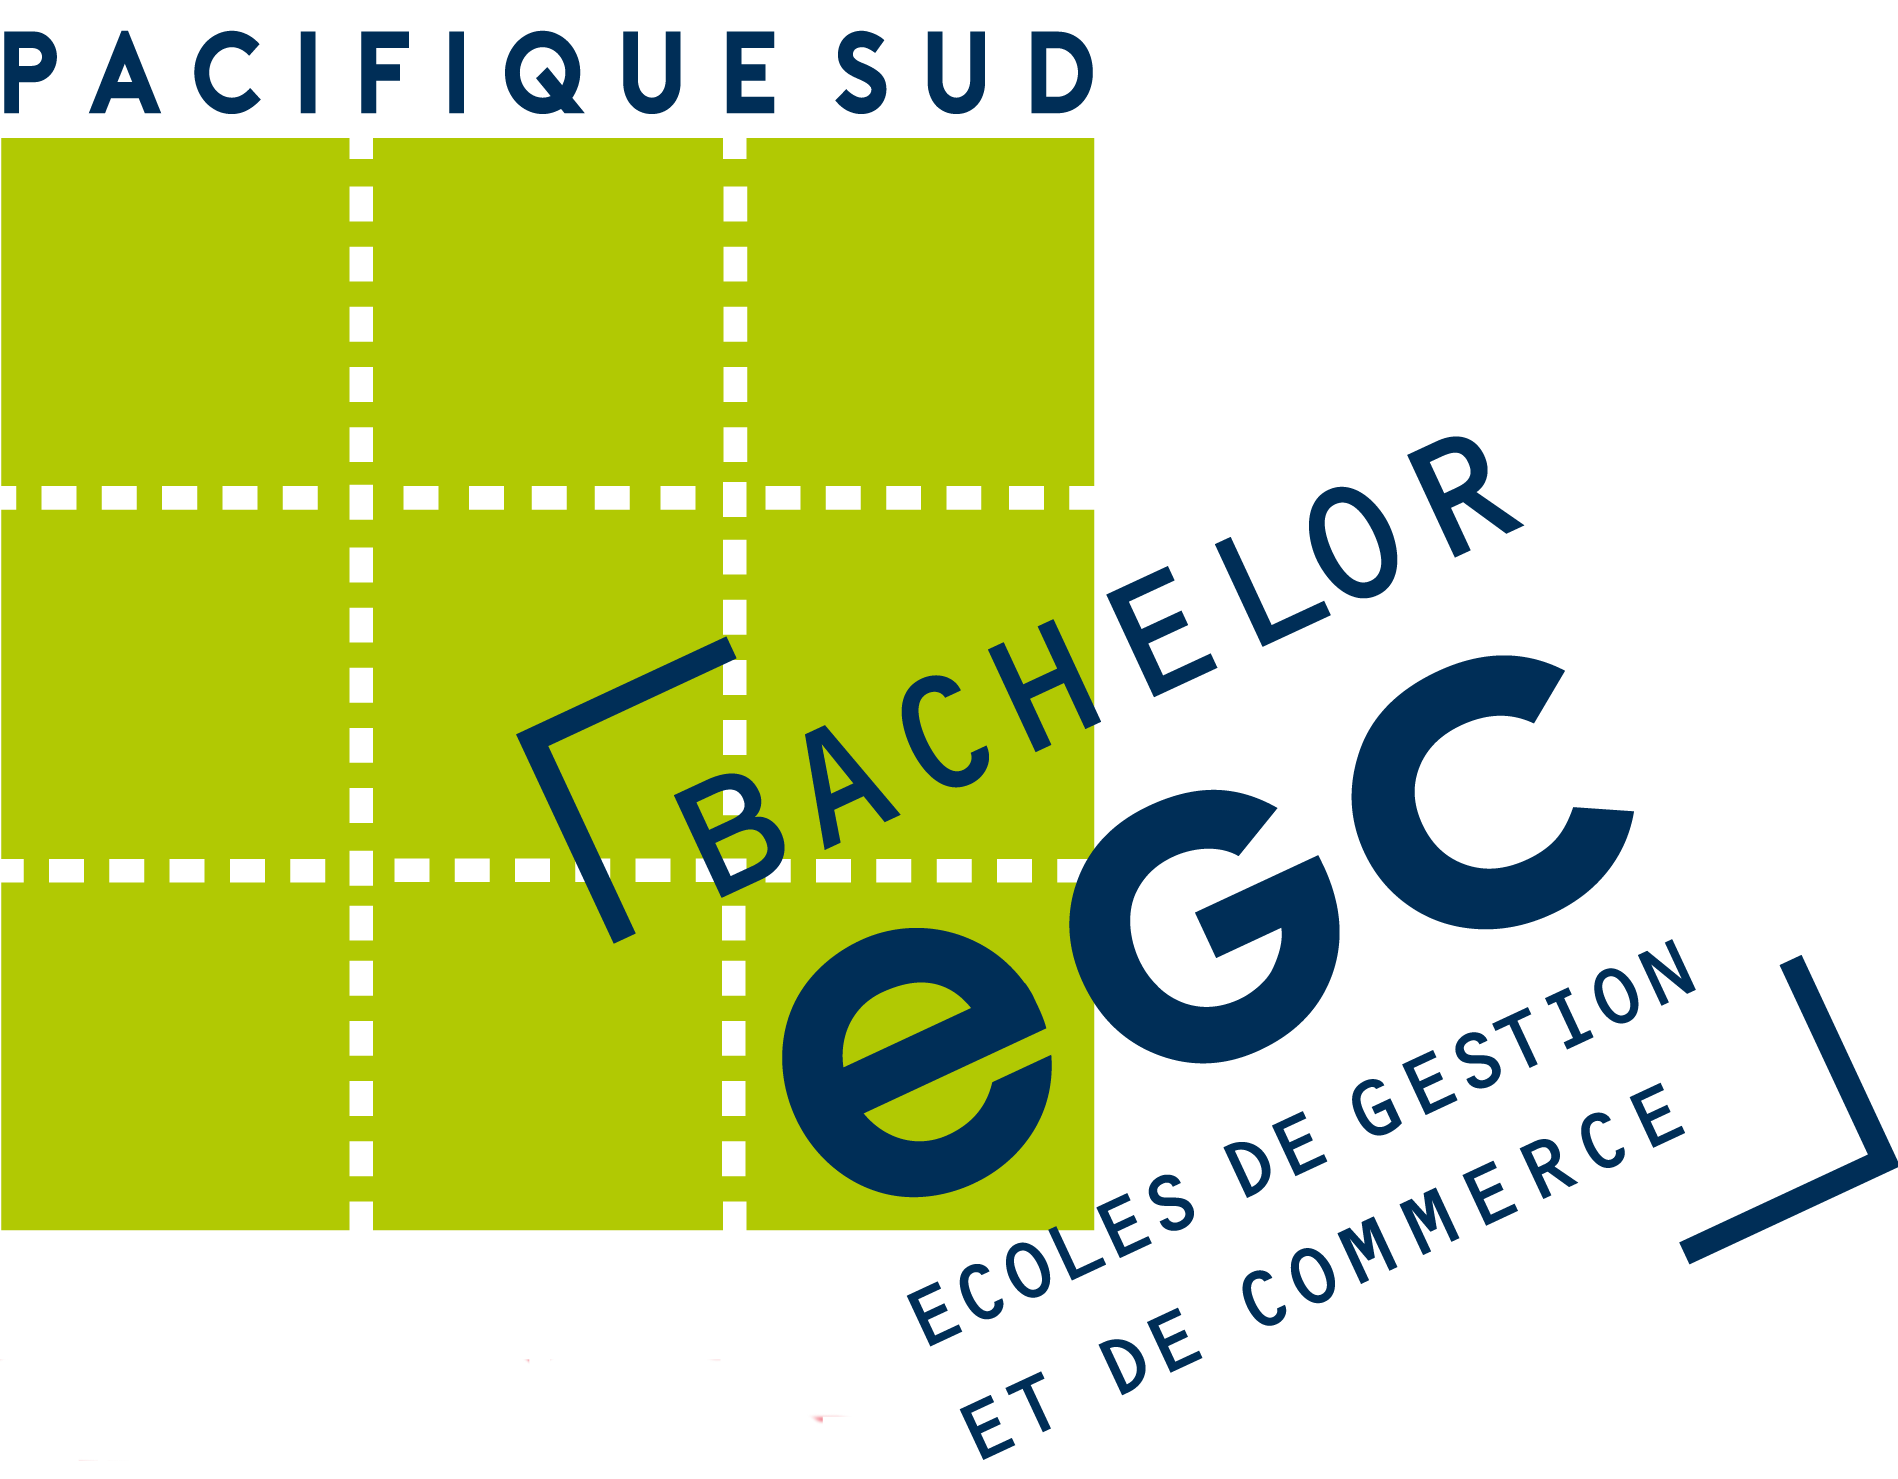 EGC